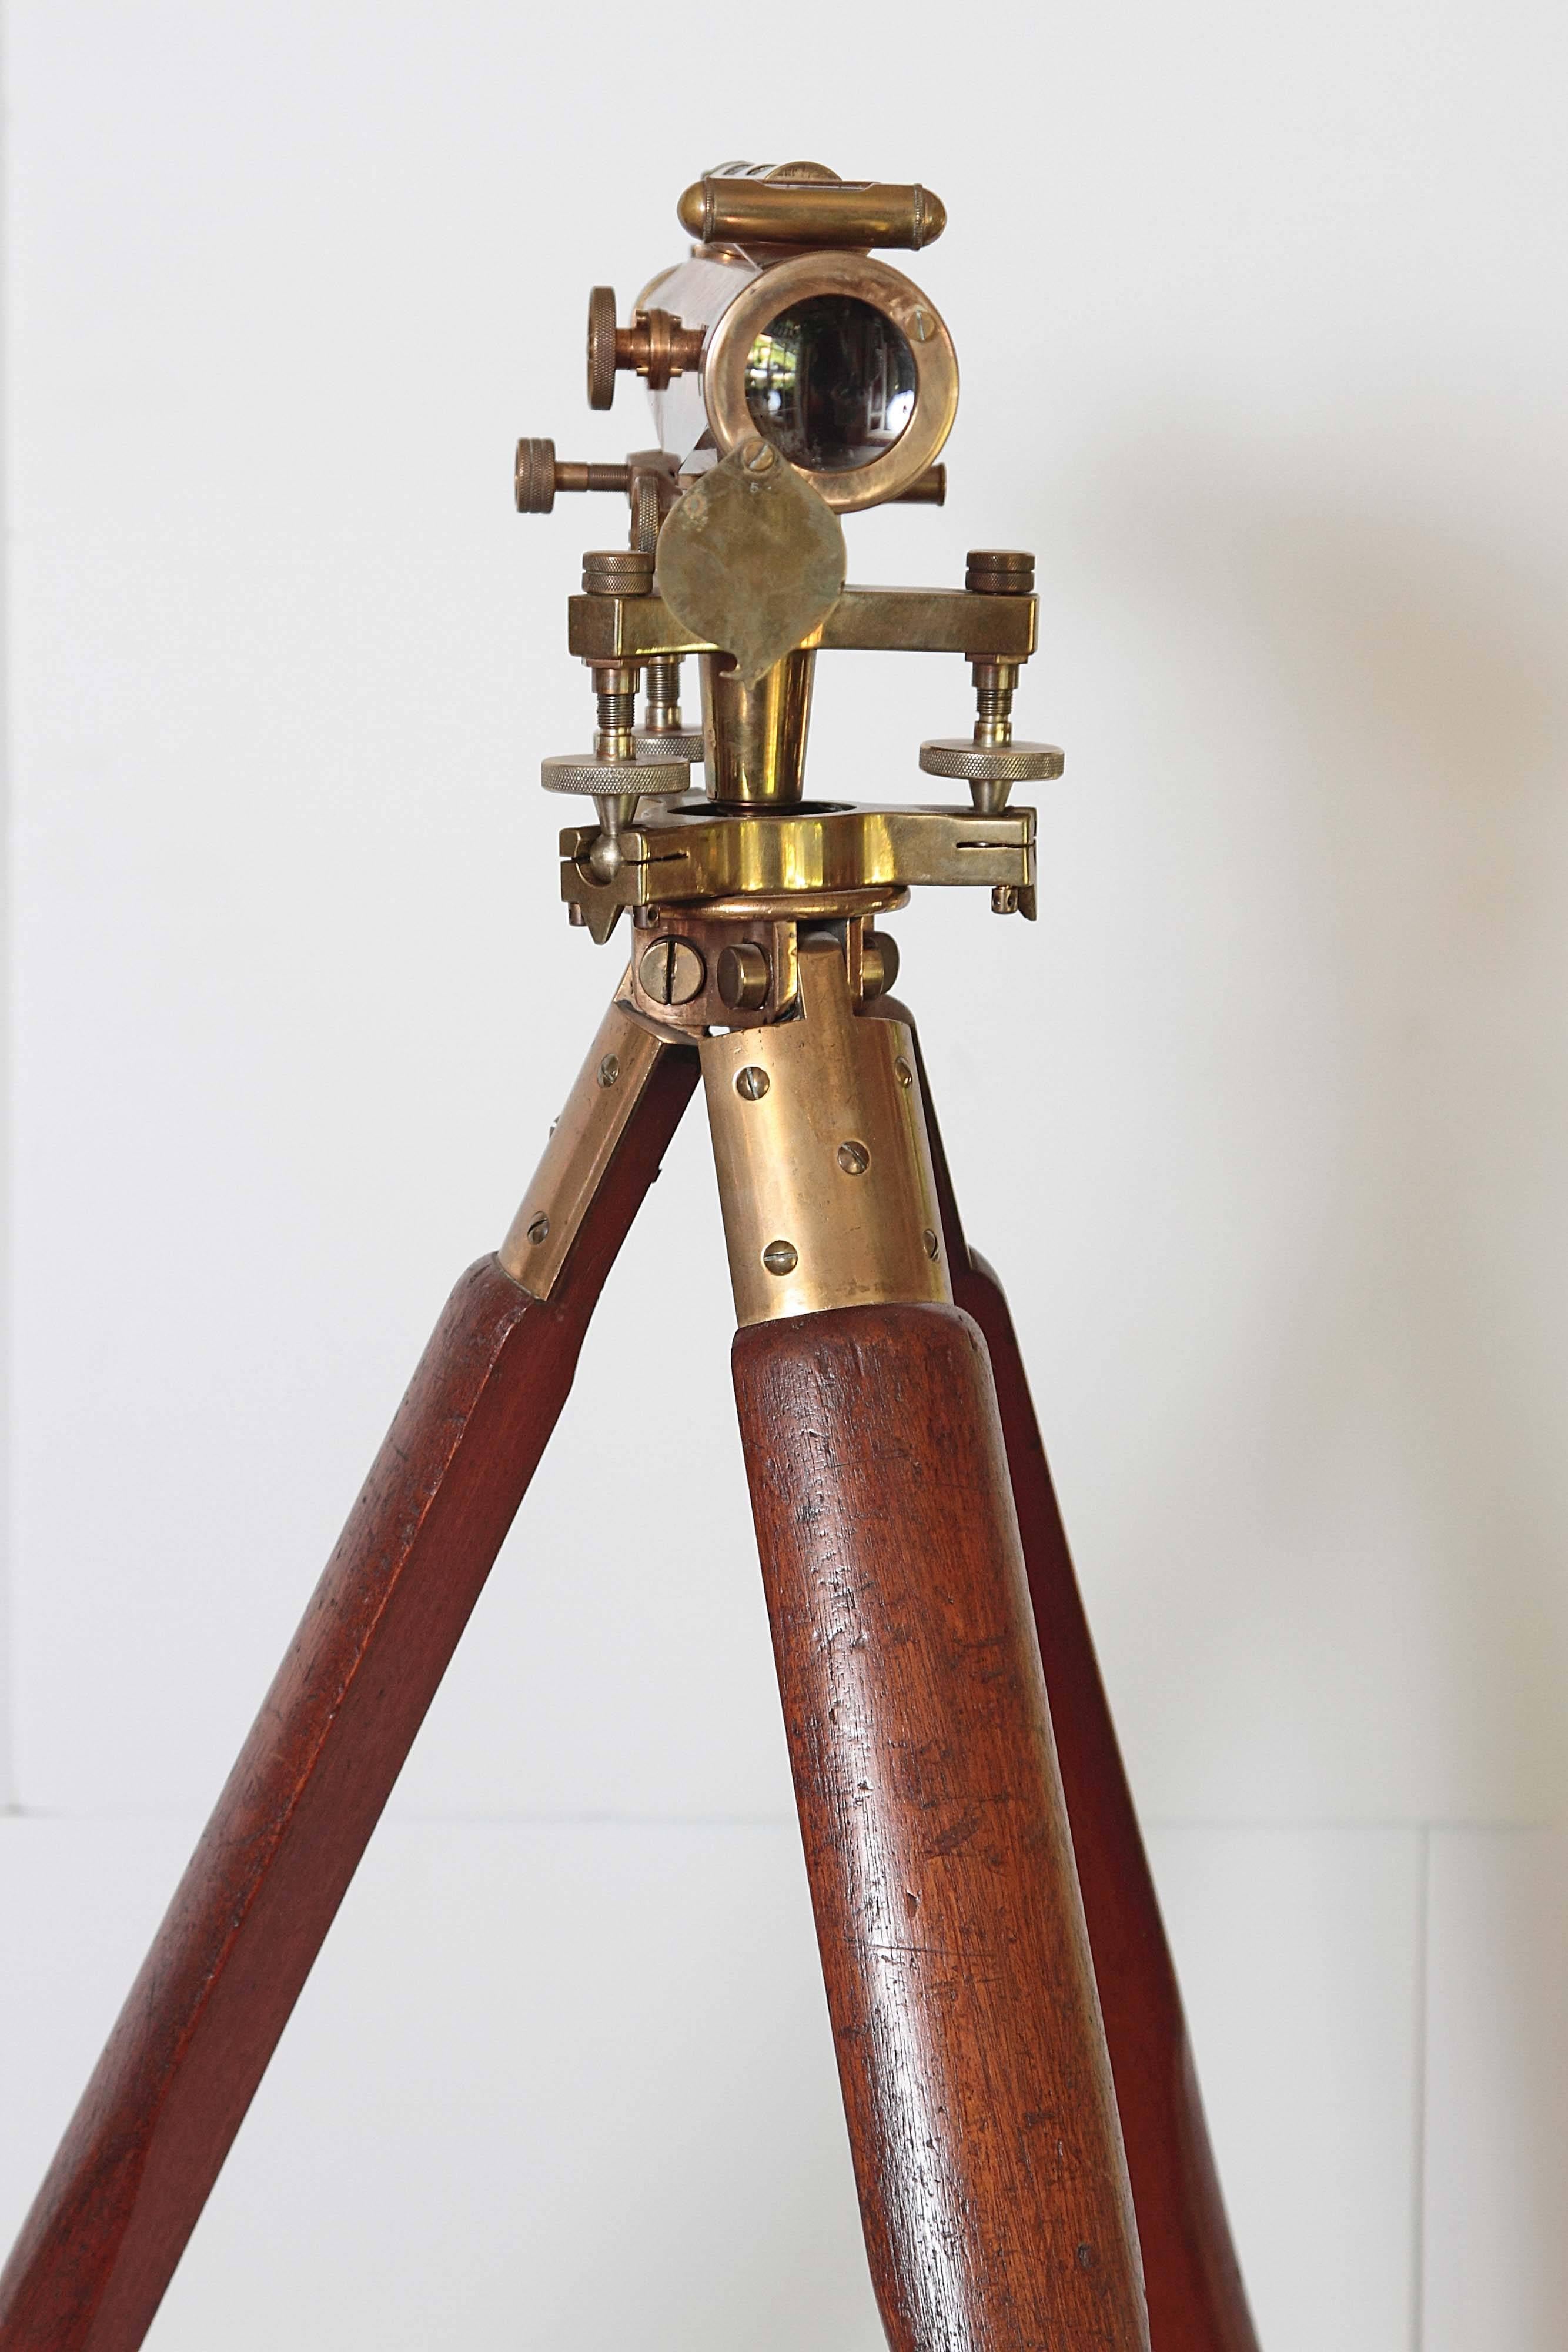 19th century surveying equipment